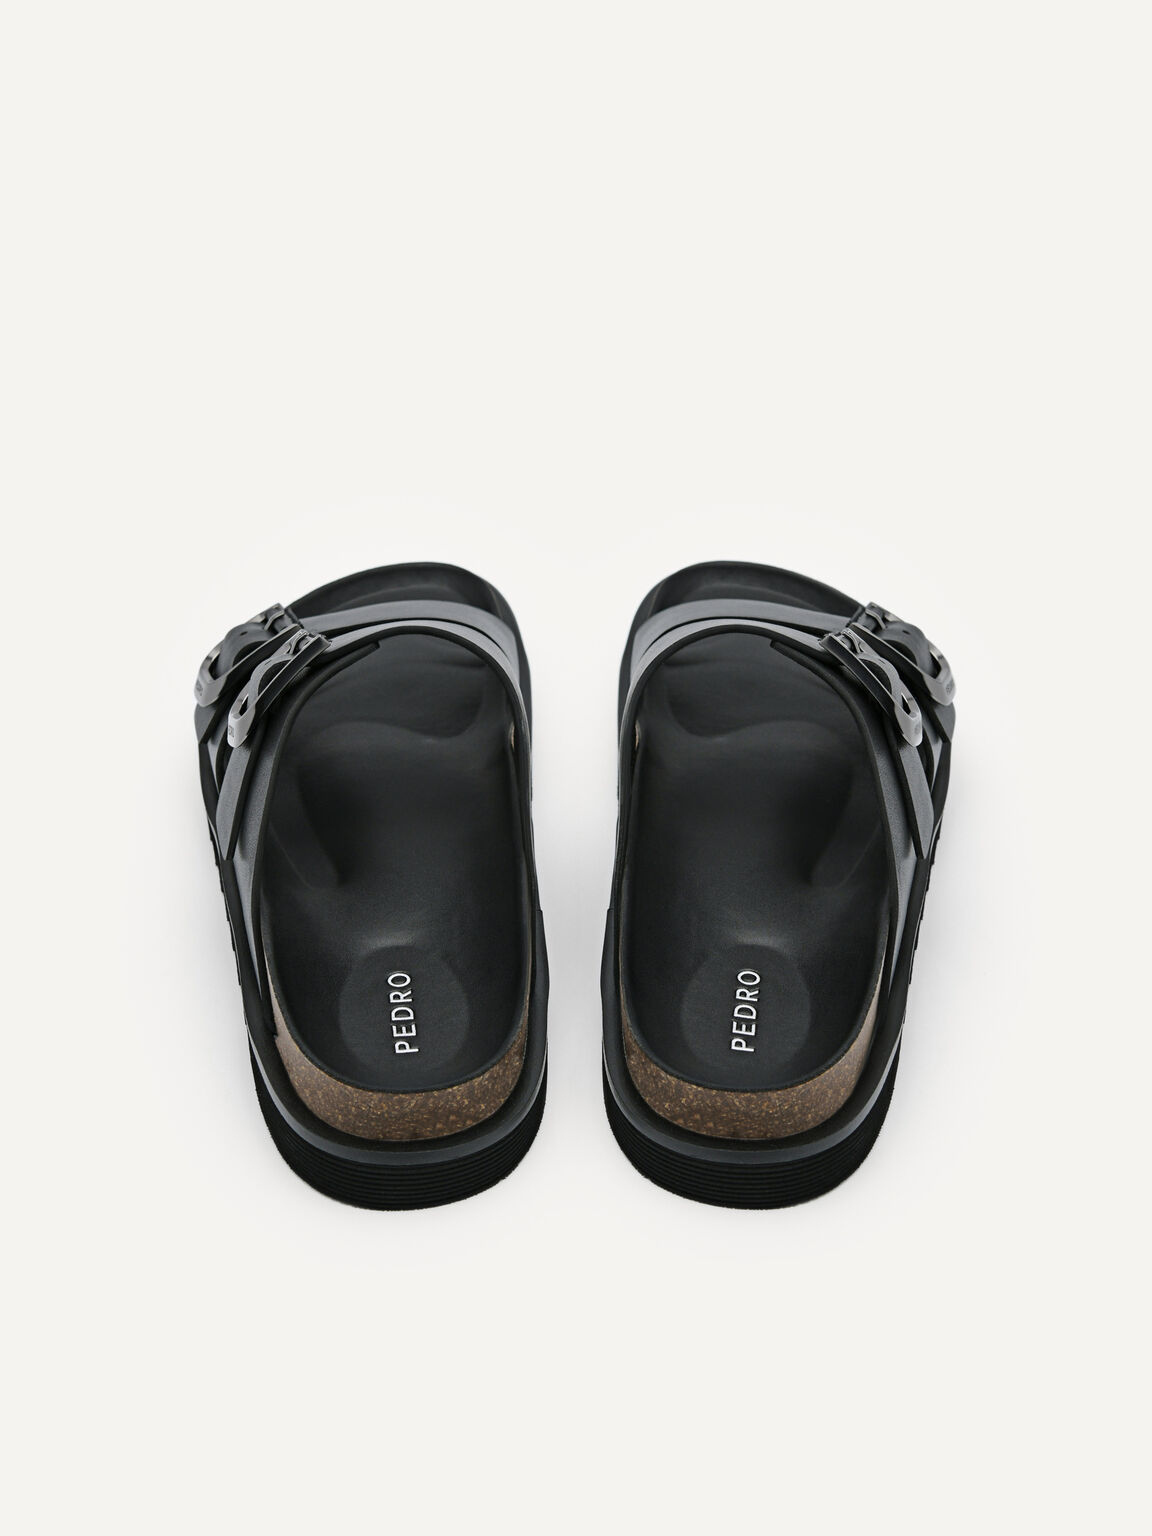 Men's Helix Slide Sandals, Black, hi-res